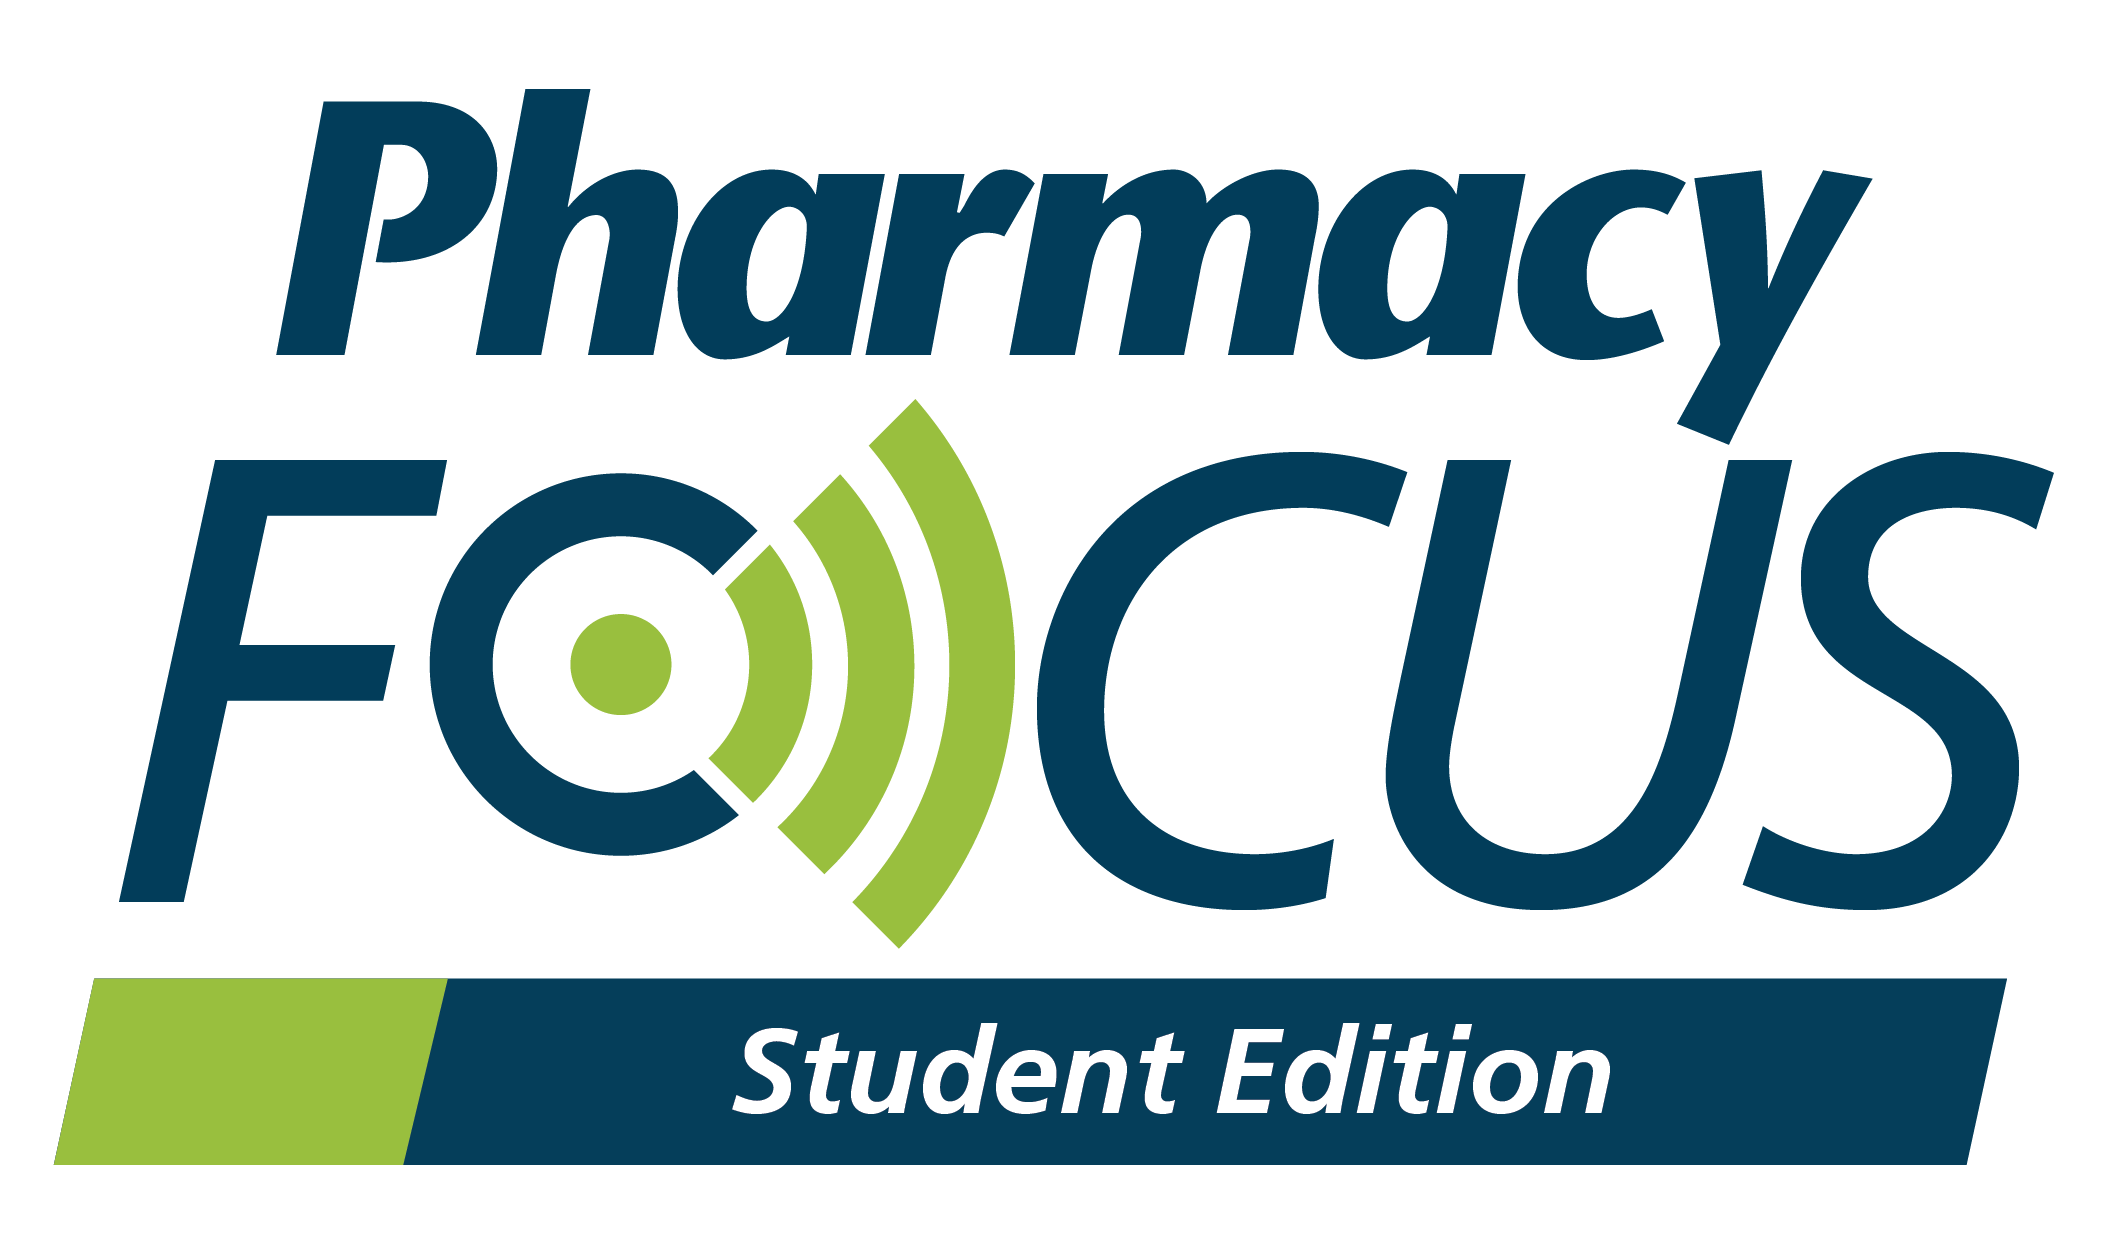 Pharmacy Focus: Student Edition - Episode 4